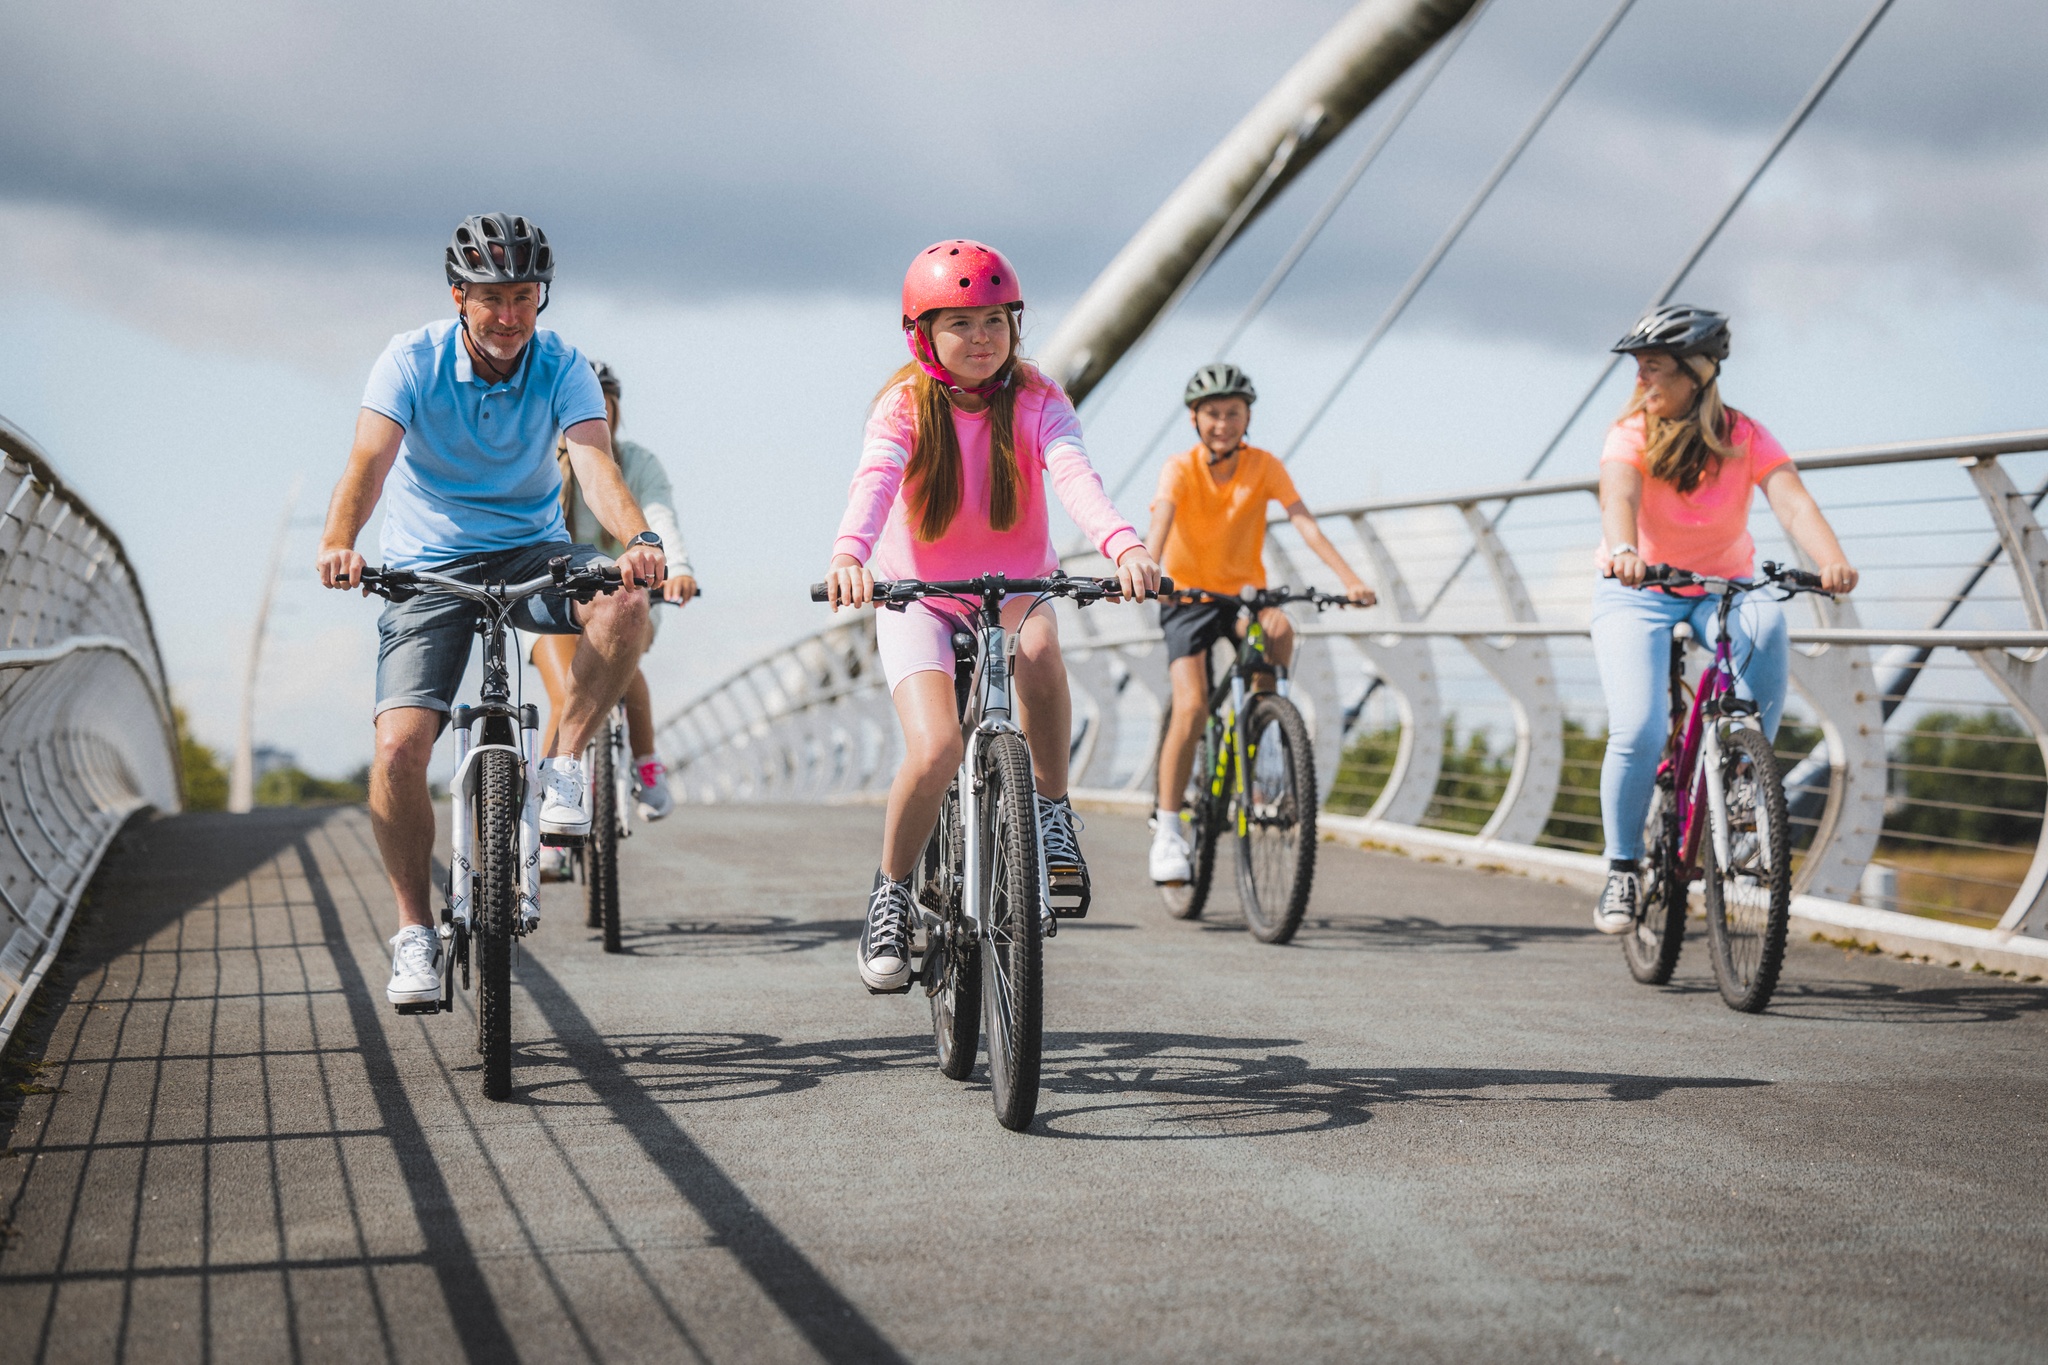 A family cycle across the Dalmarnock Smart Bridge which connects Rutherglen with Dalmarnock.